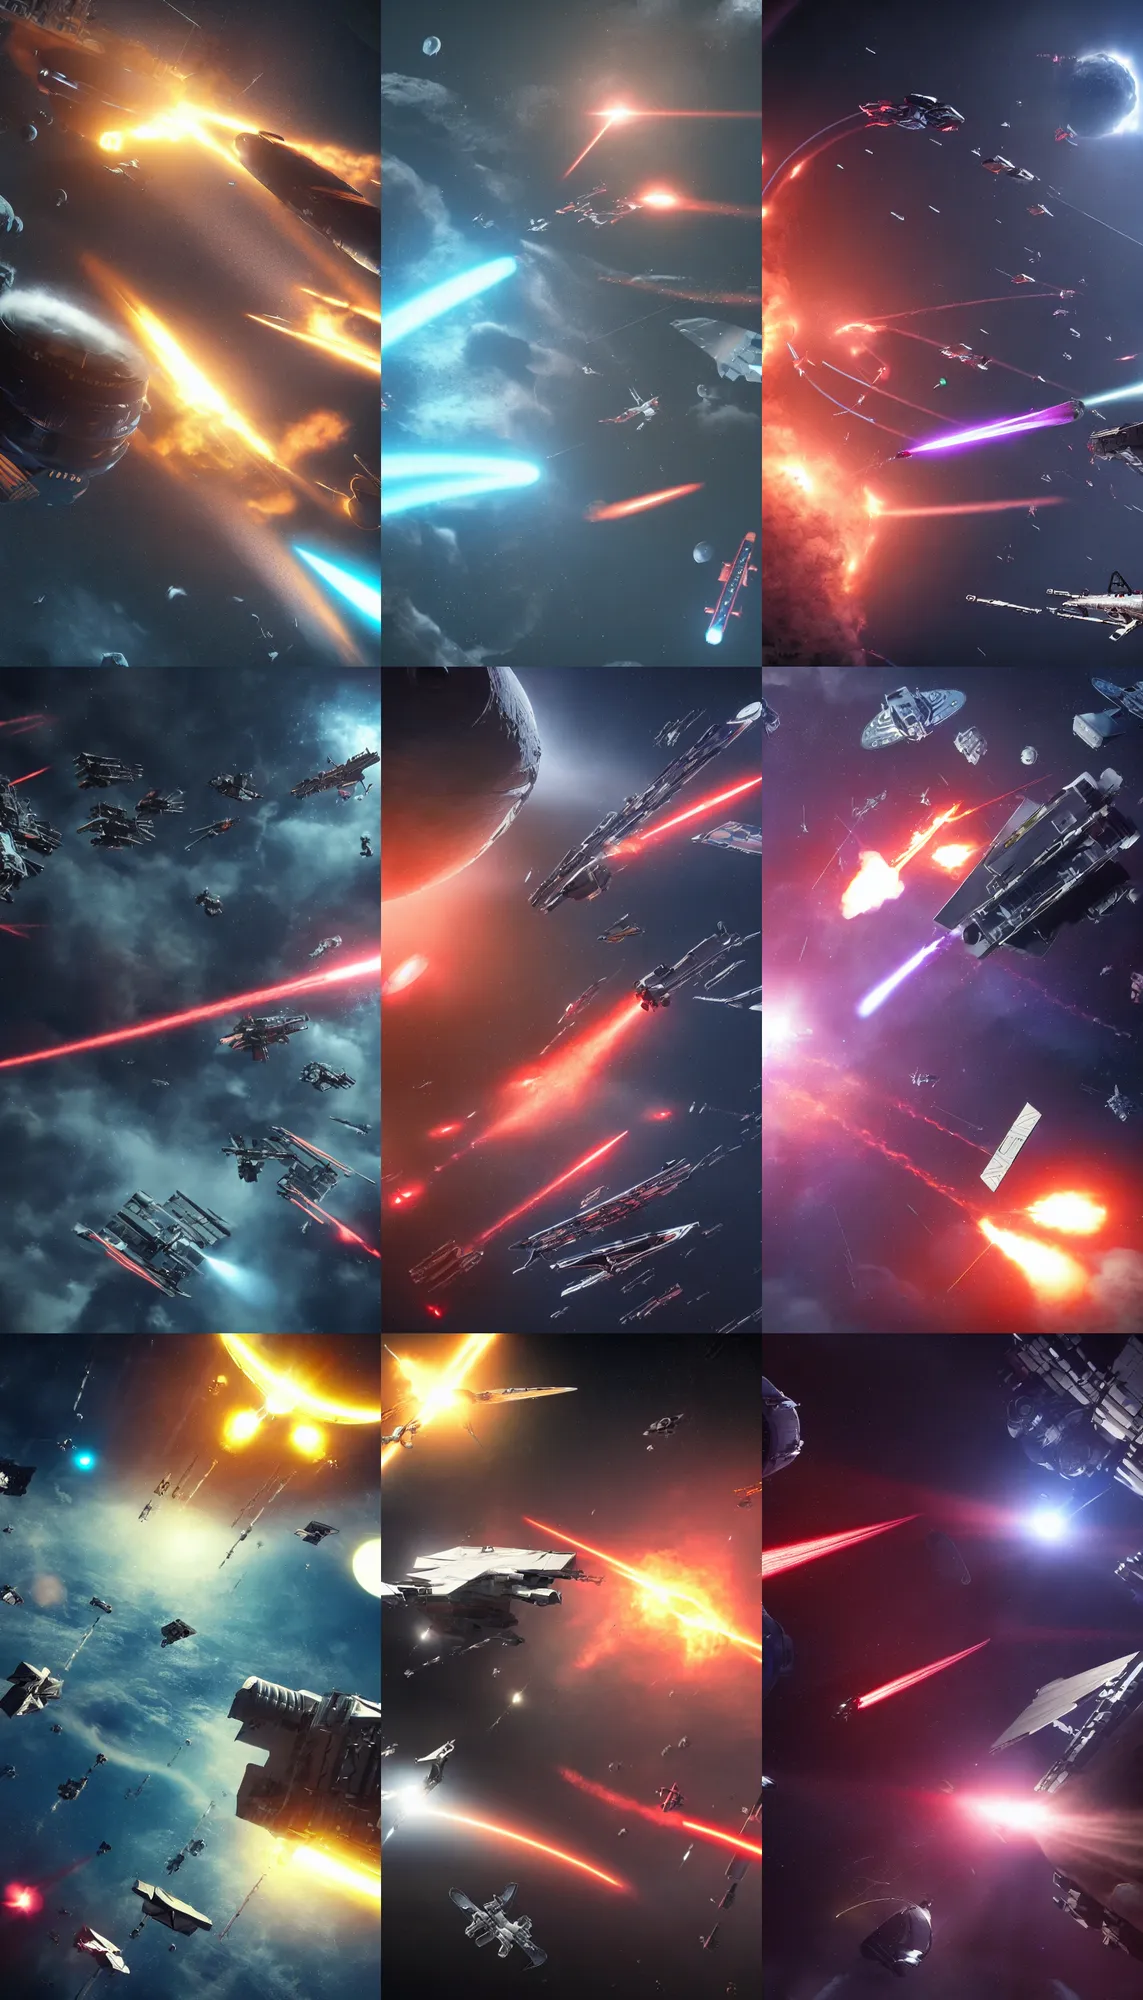 Prompt: dramatic spacecraft battle scene, sci-fi movie shot, ultra detailed, octane render, laser fire, missiles, explosions, 8k